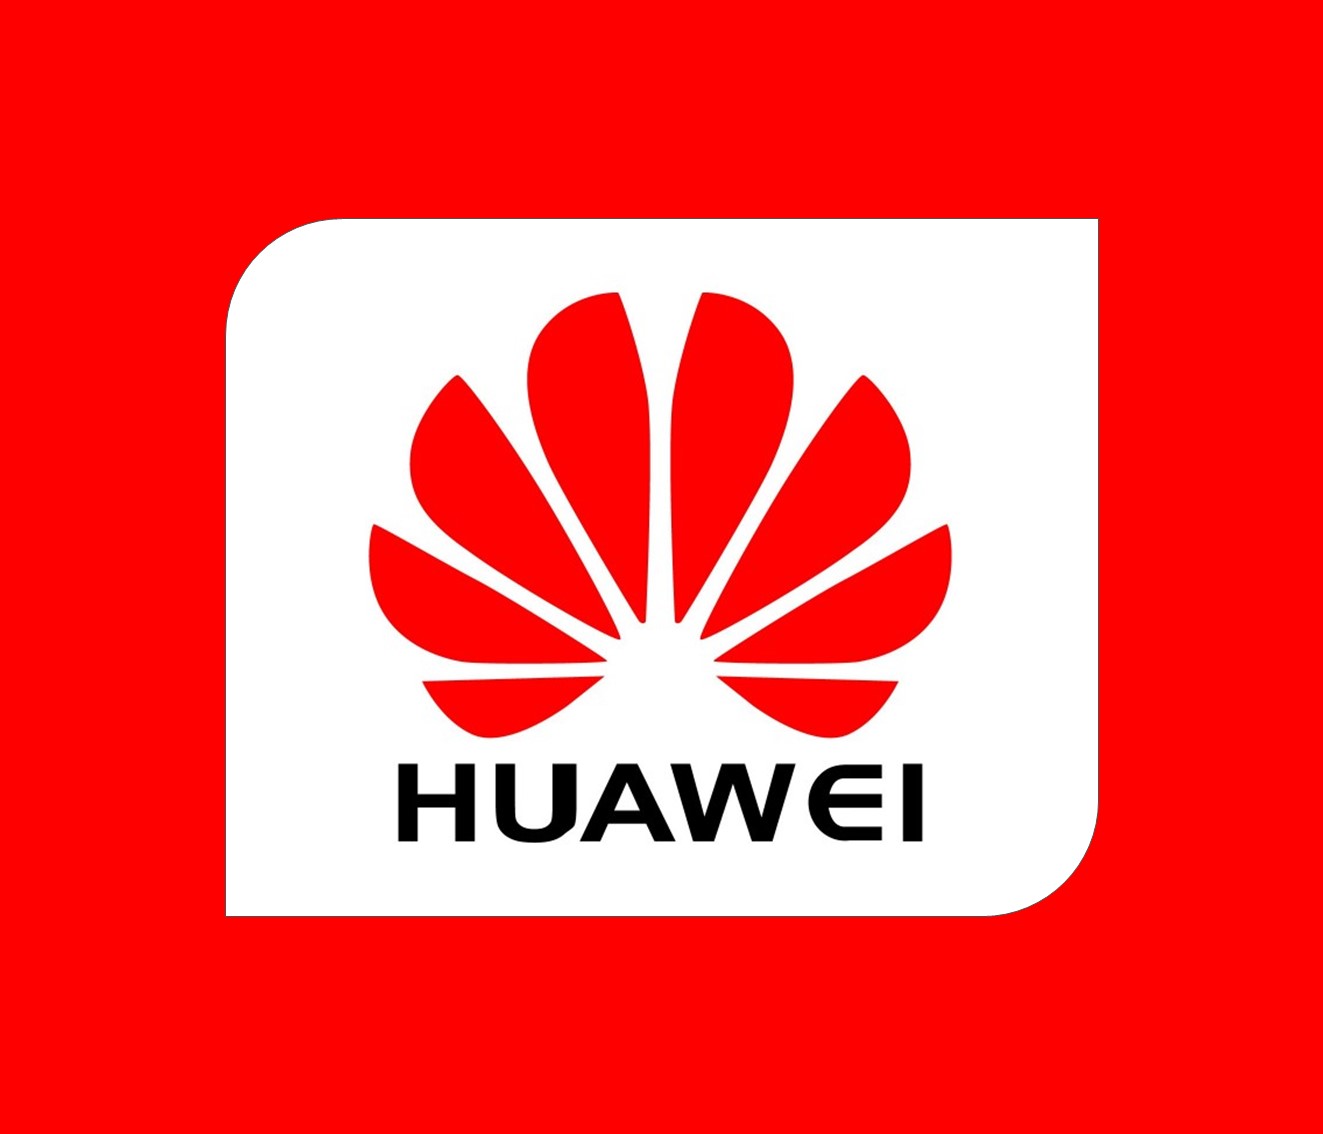 Huawei jobs